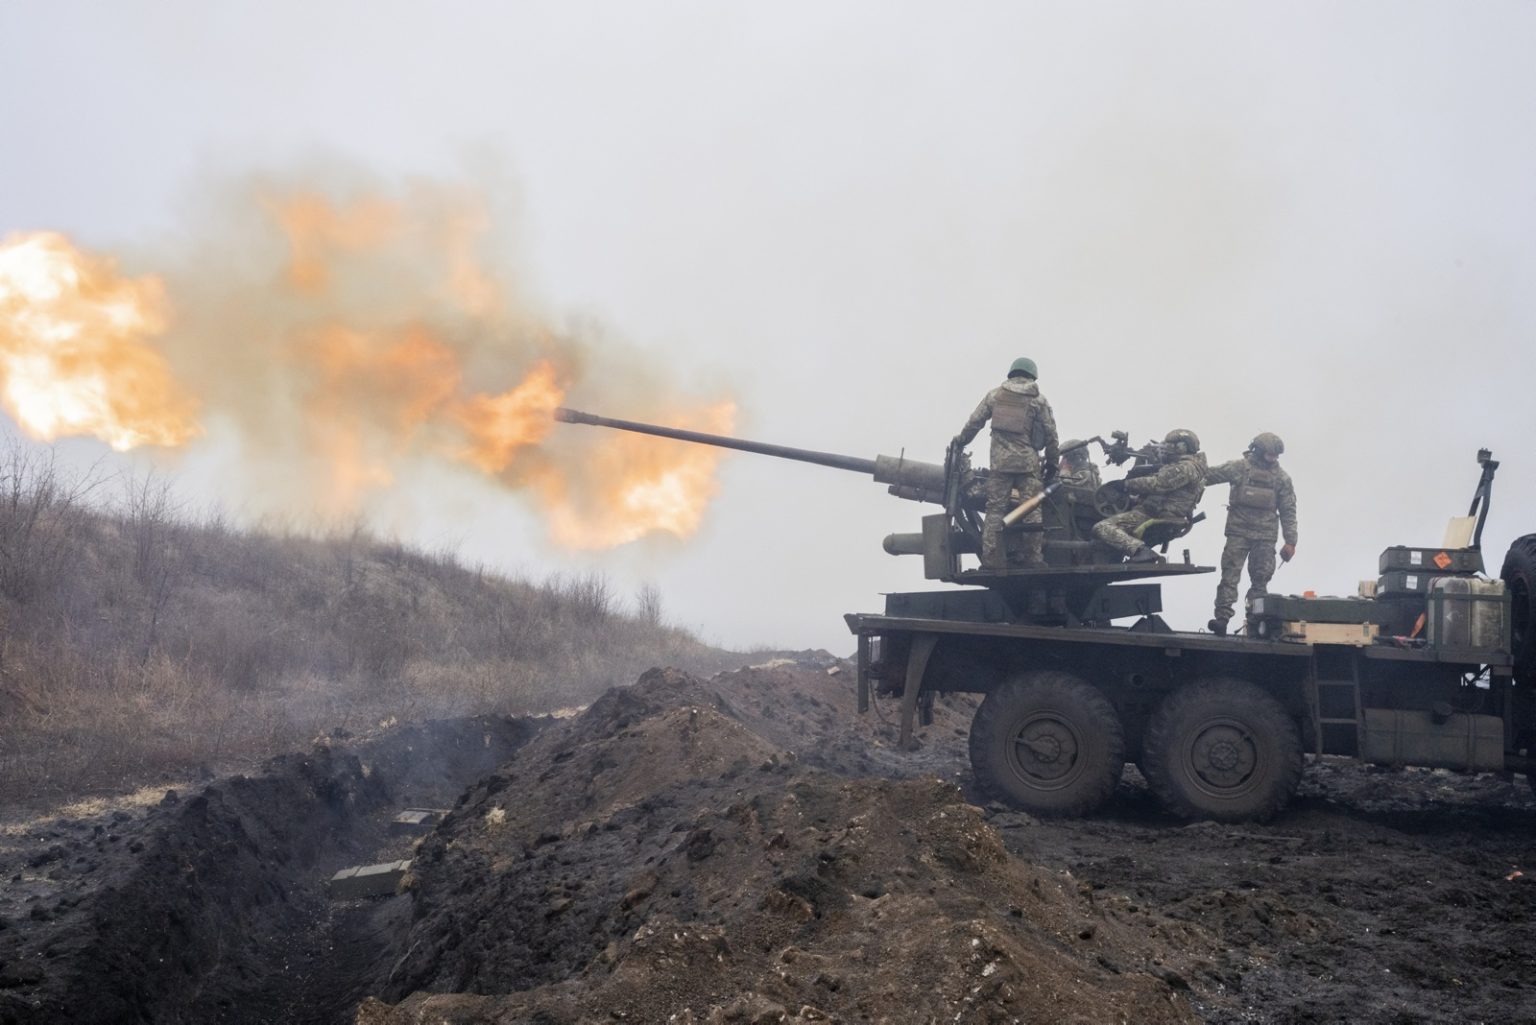 UKRAINE, Bakhmut. January 22, 2023 - Ukrainian artillery fired at Russian positions near Bakhmut. ><
UCRAINA, Bakhmut. 22 gennaio 2023 - L'artiglieria ucraina ha sparato contro le posizioni russe nei pressi di Bakhmut.